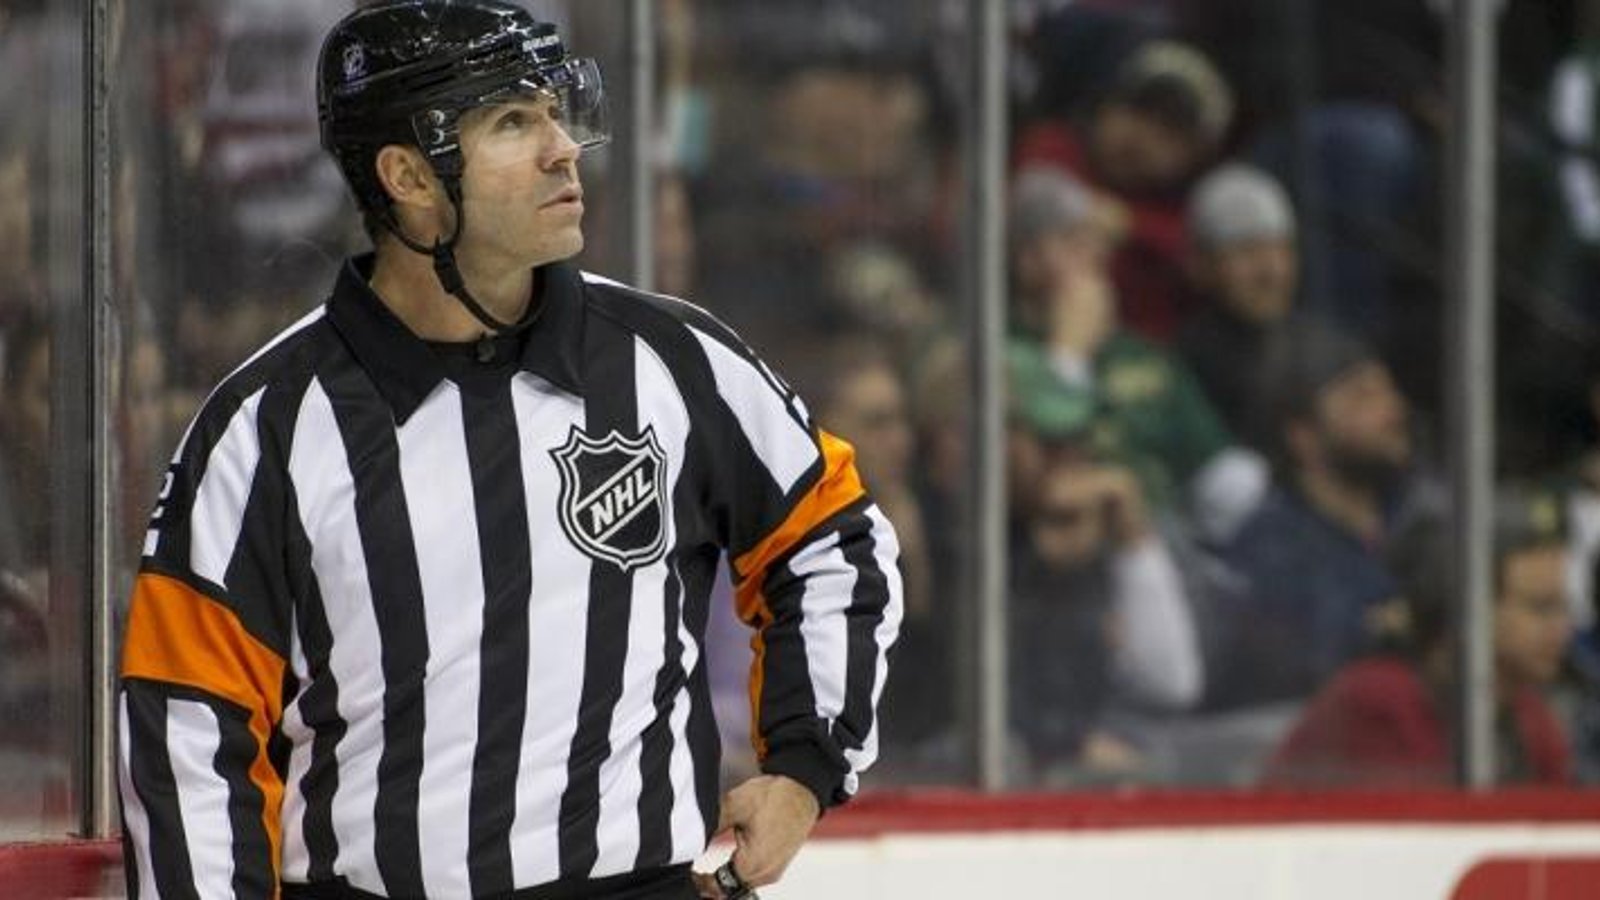 Report: Study reveals ethnic bias among NHL referees.